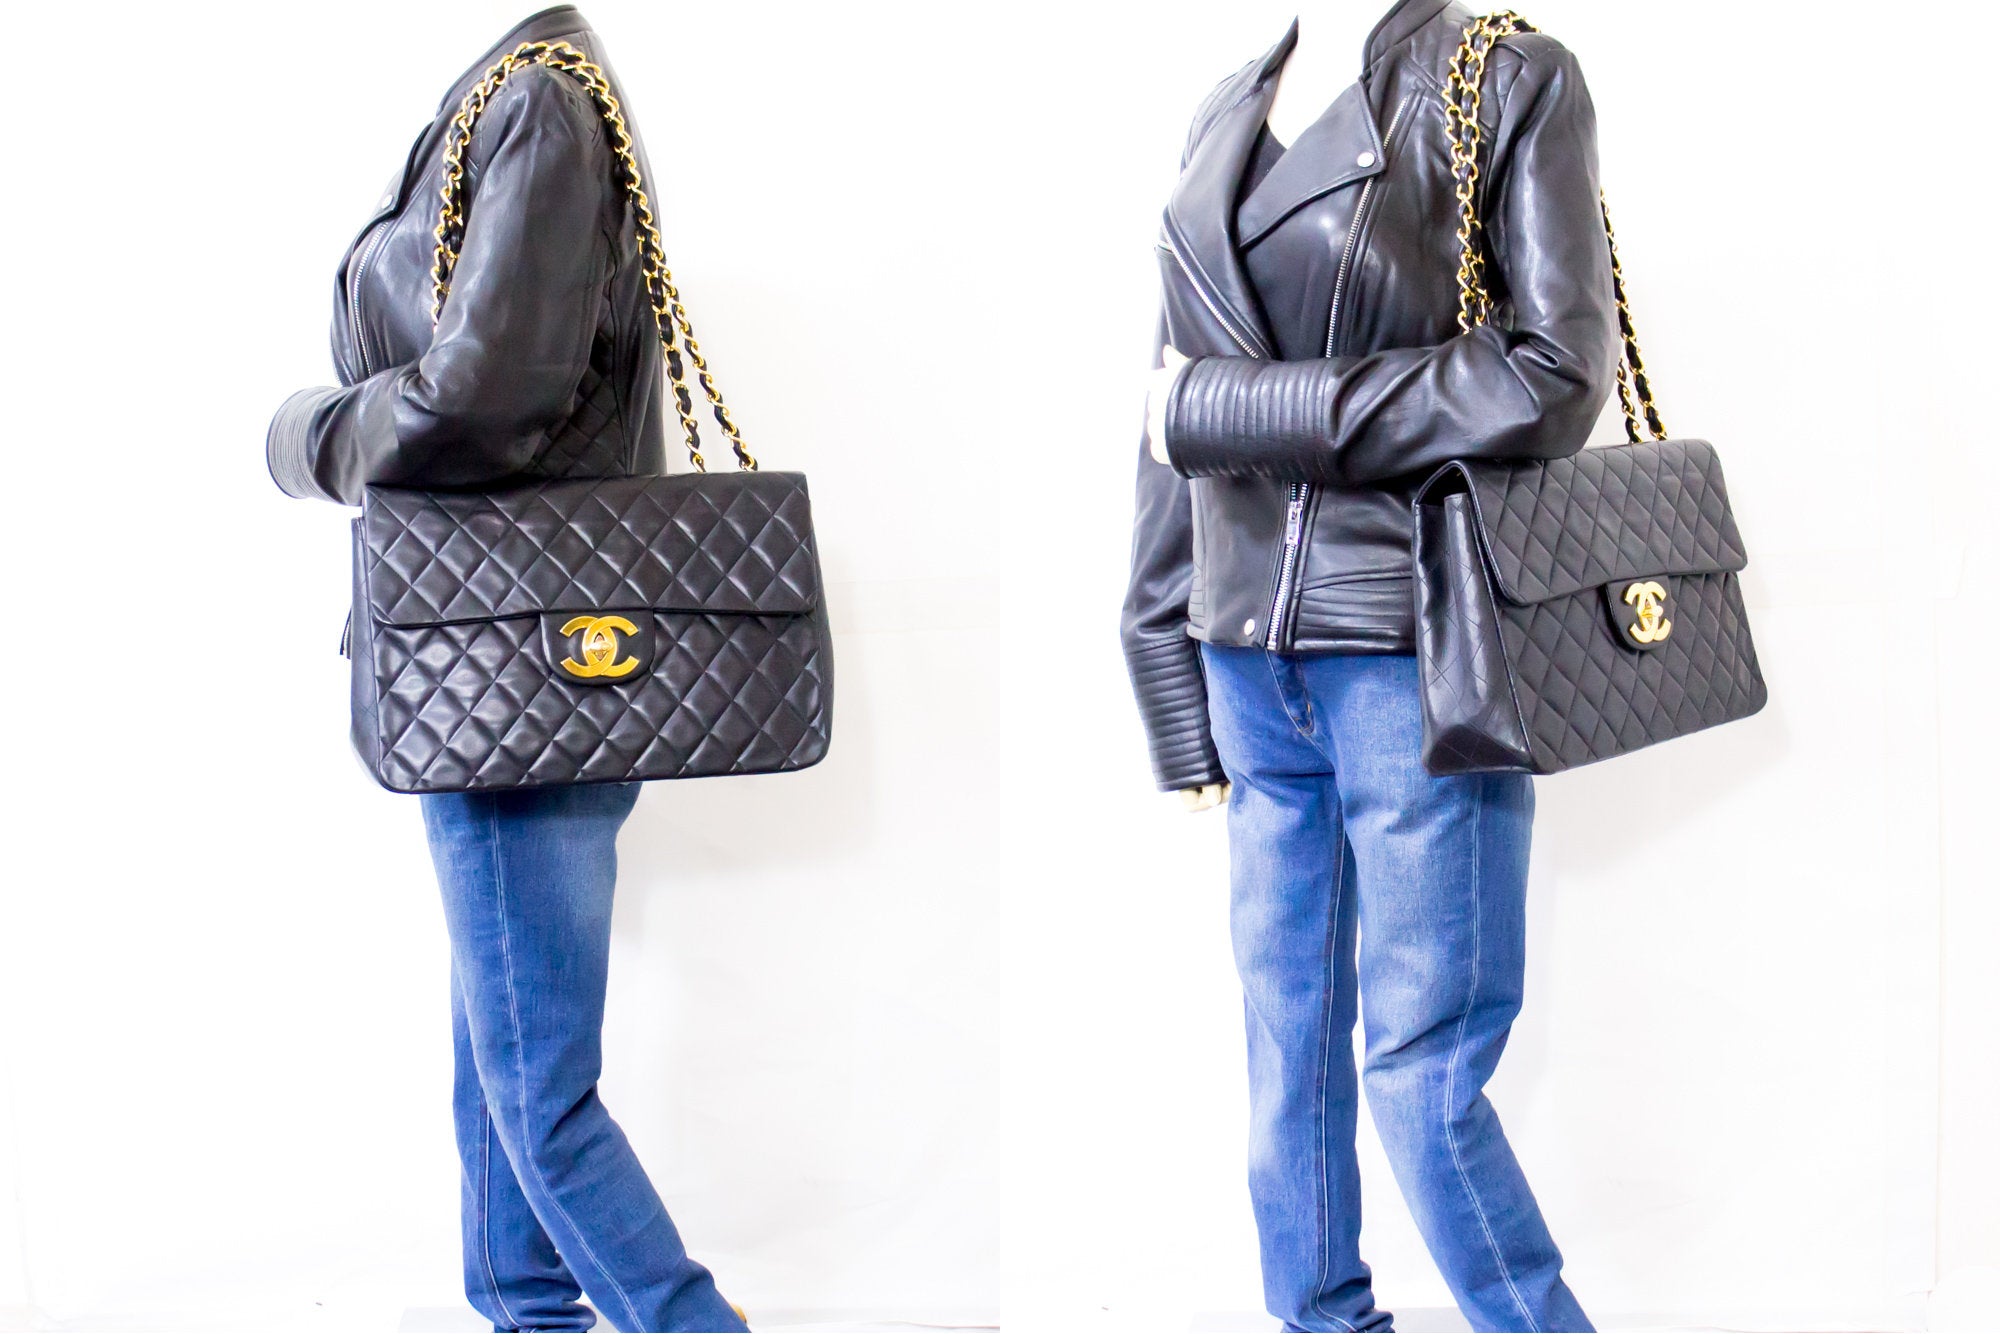 Vintage Chanel Black Denim Maxi Classic Flap Shoulder Bag